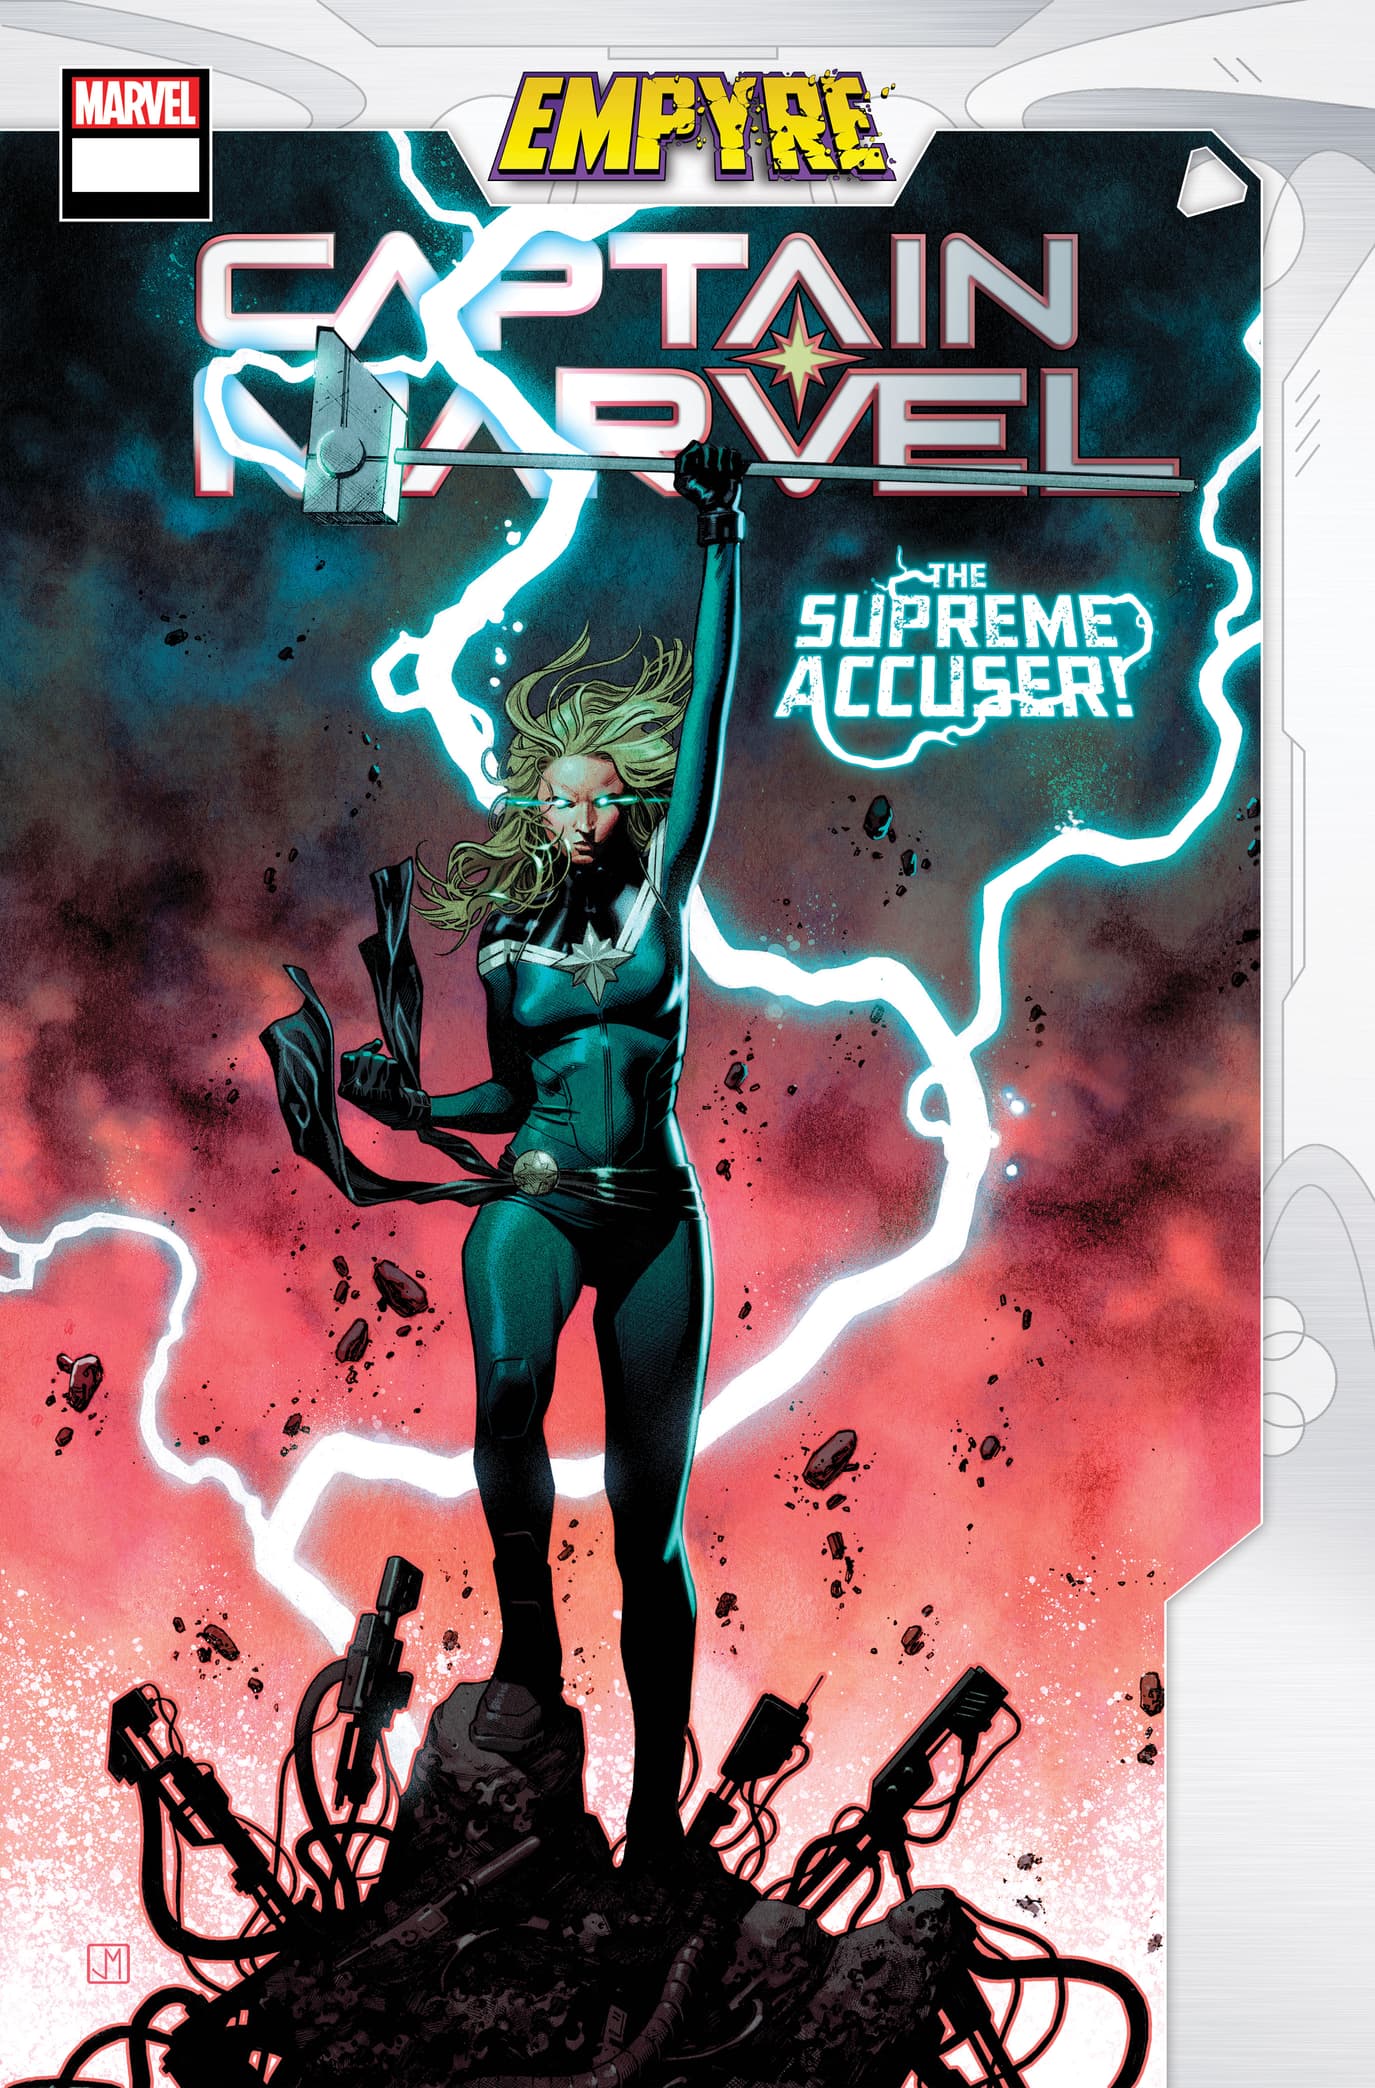 Captain Marvel #18 cover